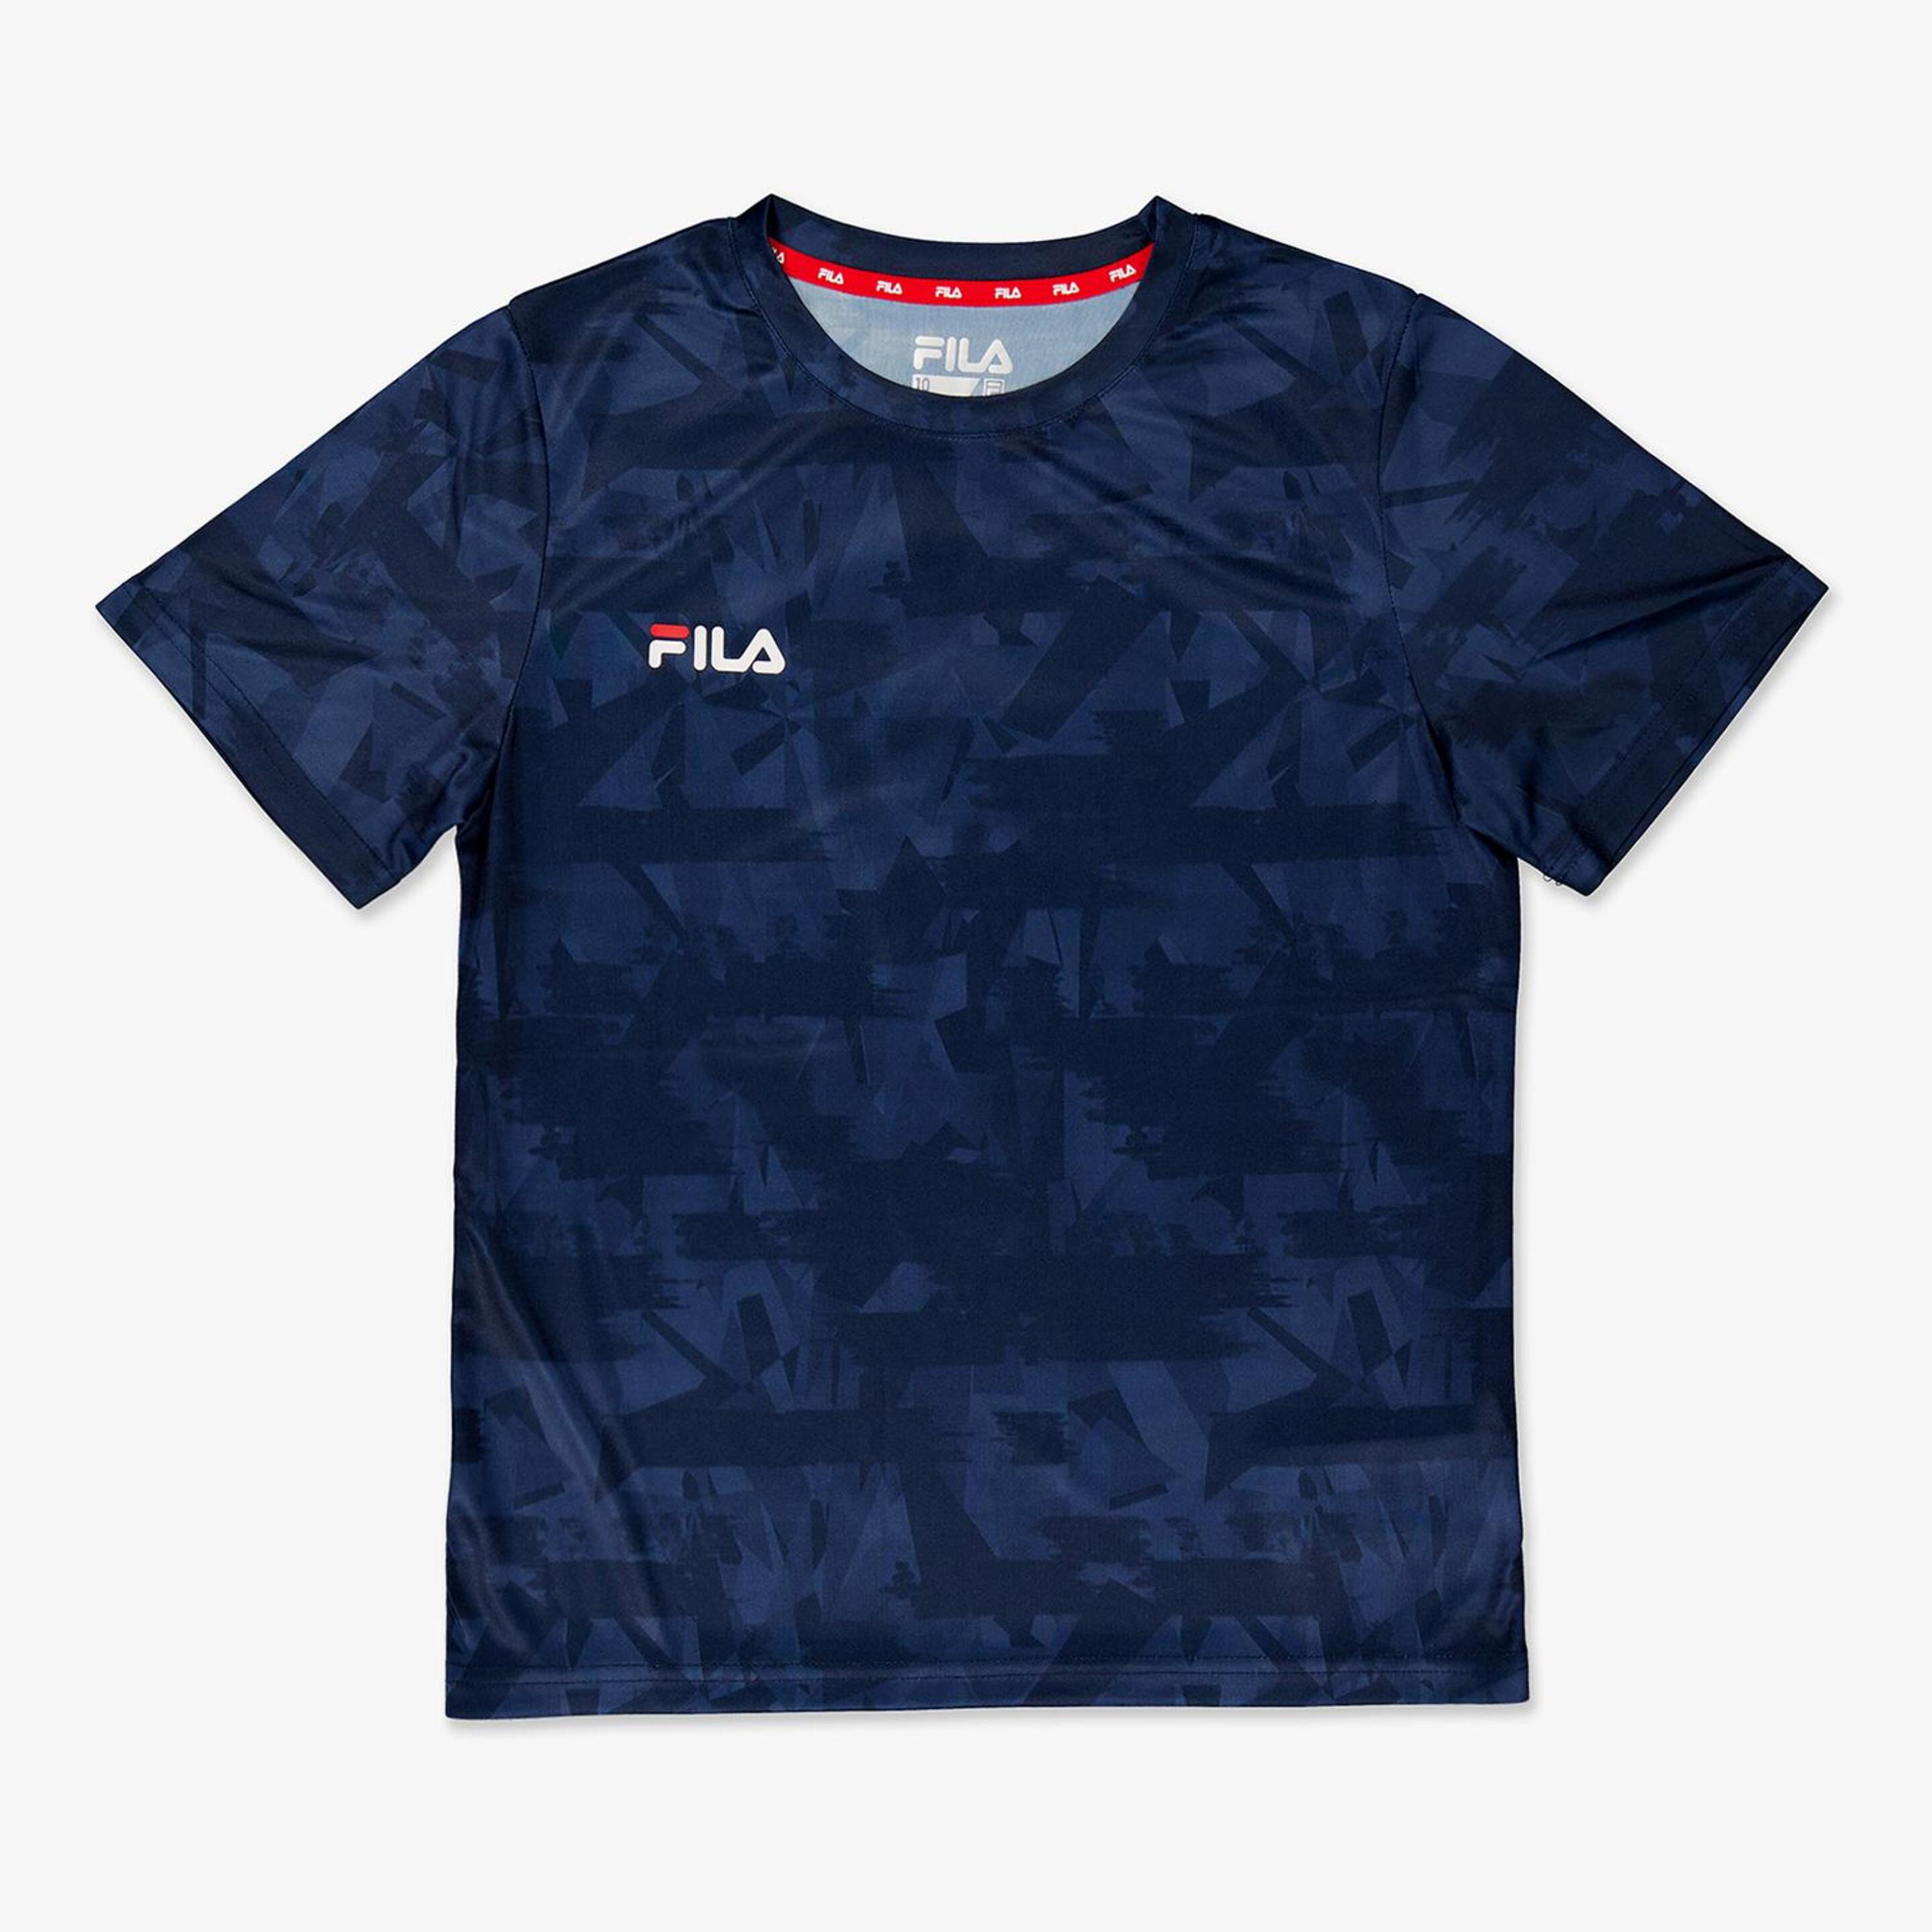 Fila Performance - azul - T-shirt Futebol Rapaz